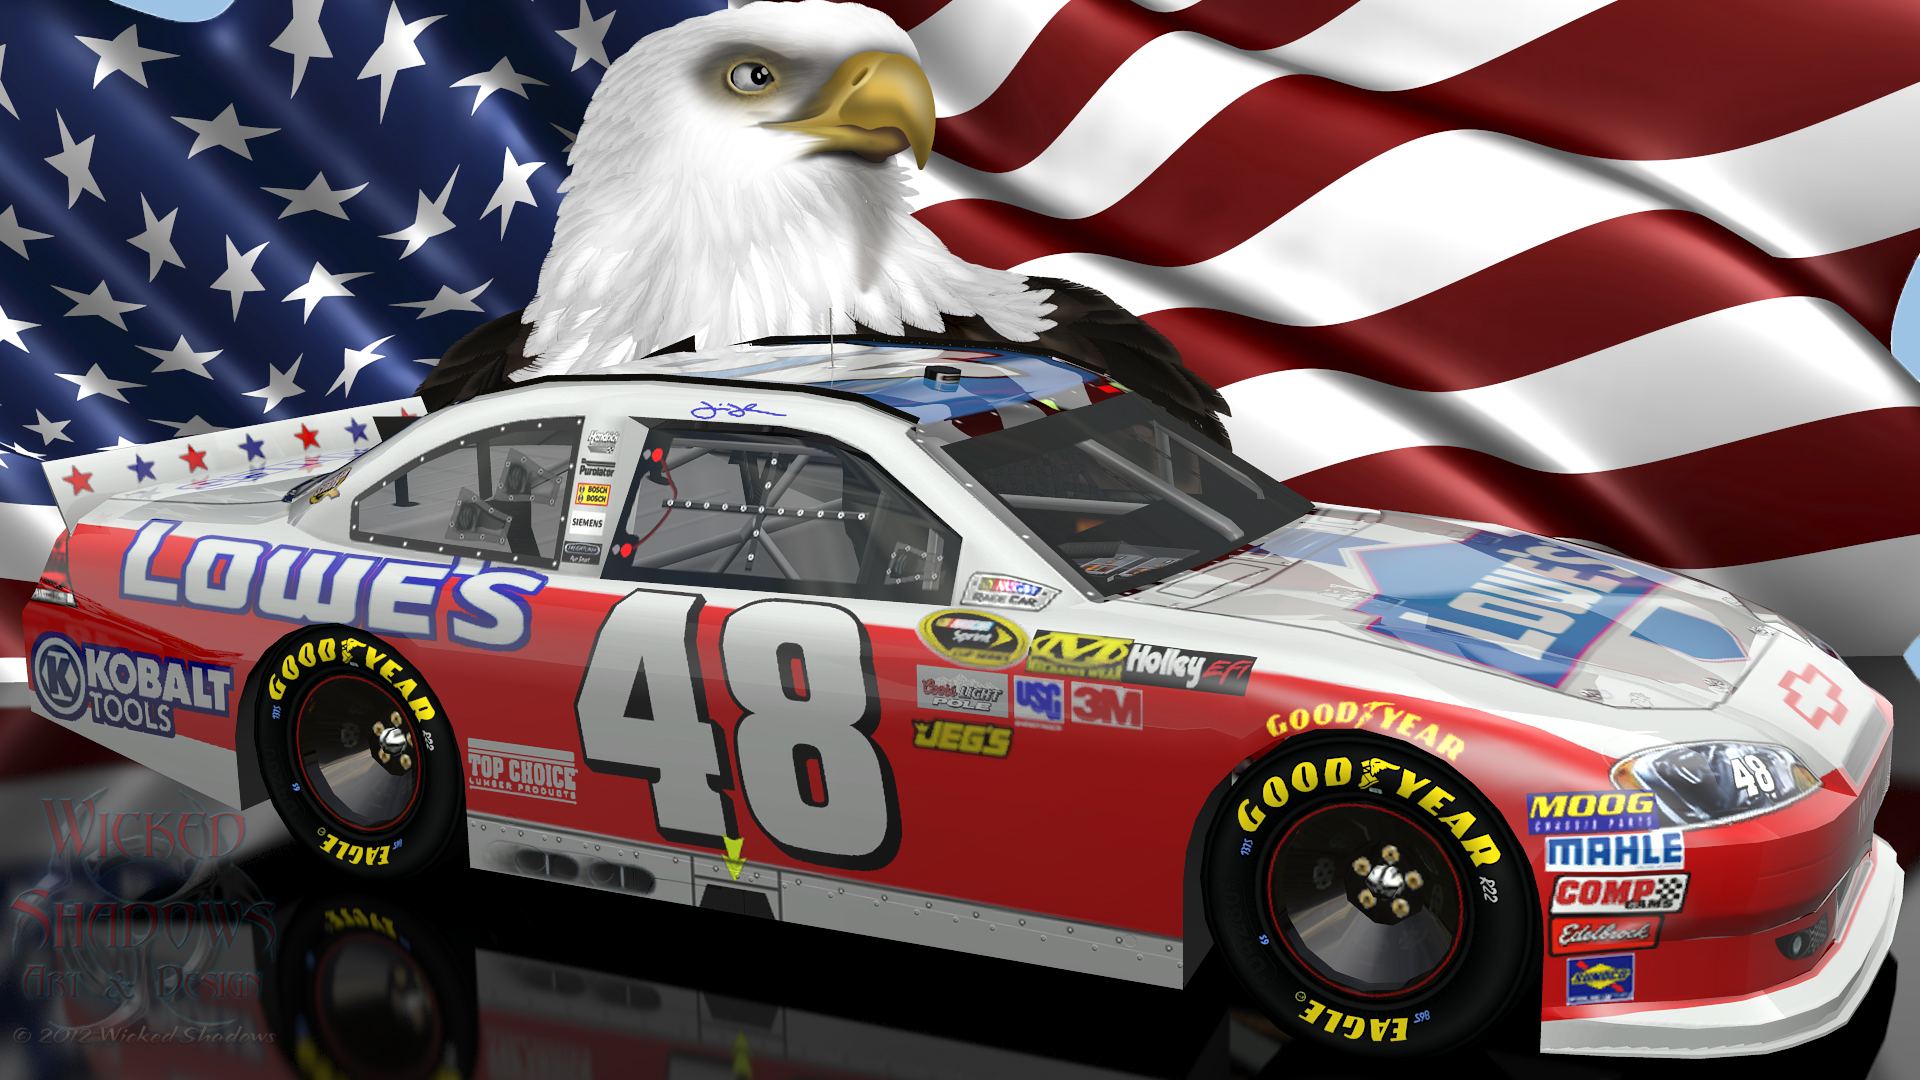 Eagle Mural On American Flag - HD Wallpaper 